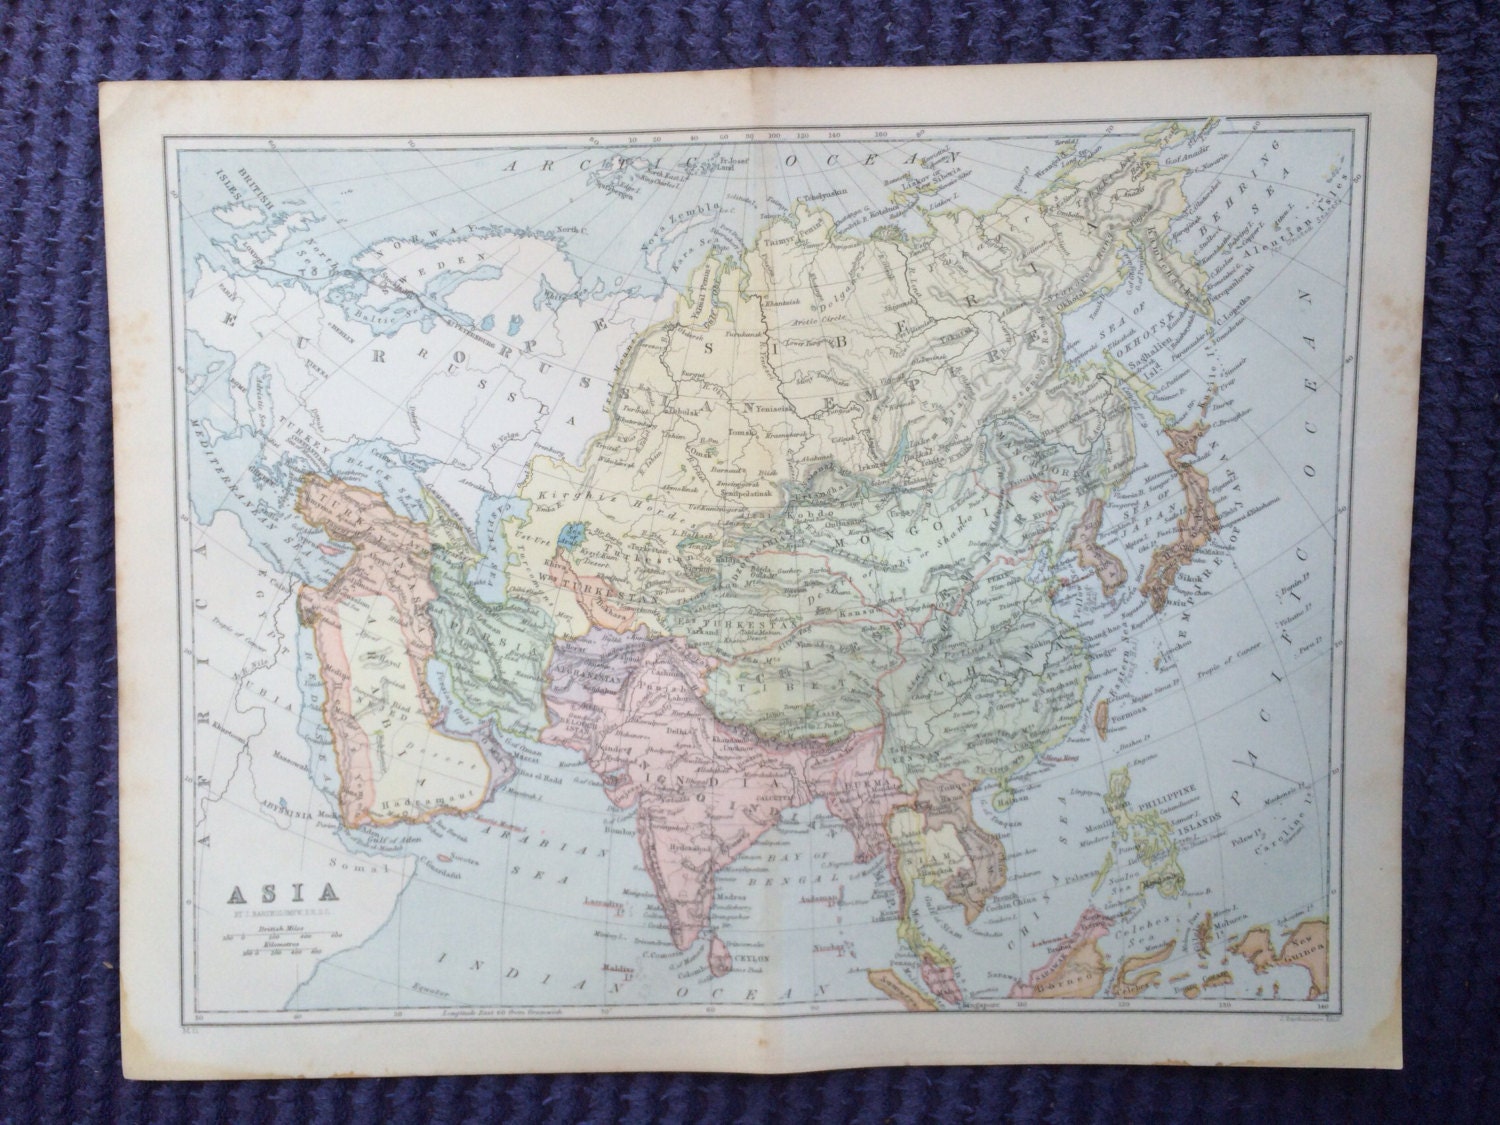 1904 ASIA original antique map - geography, cartography, wall decor - 9 ...